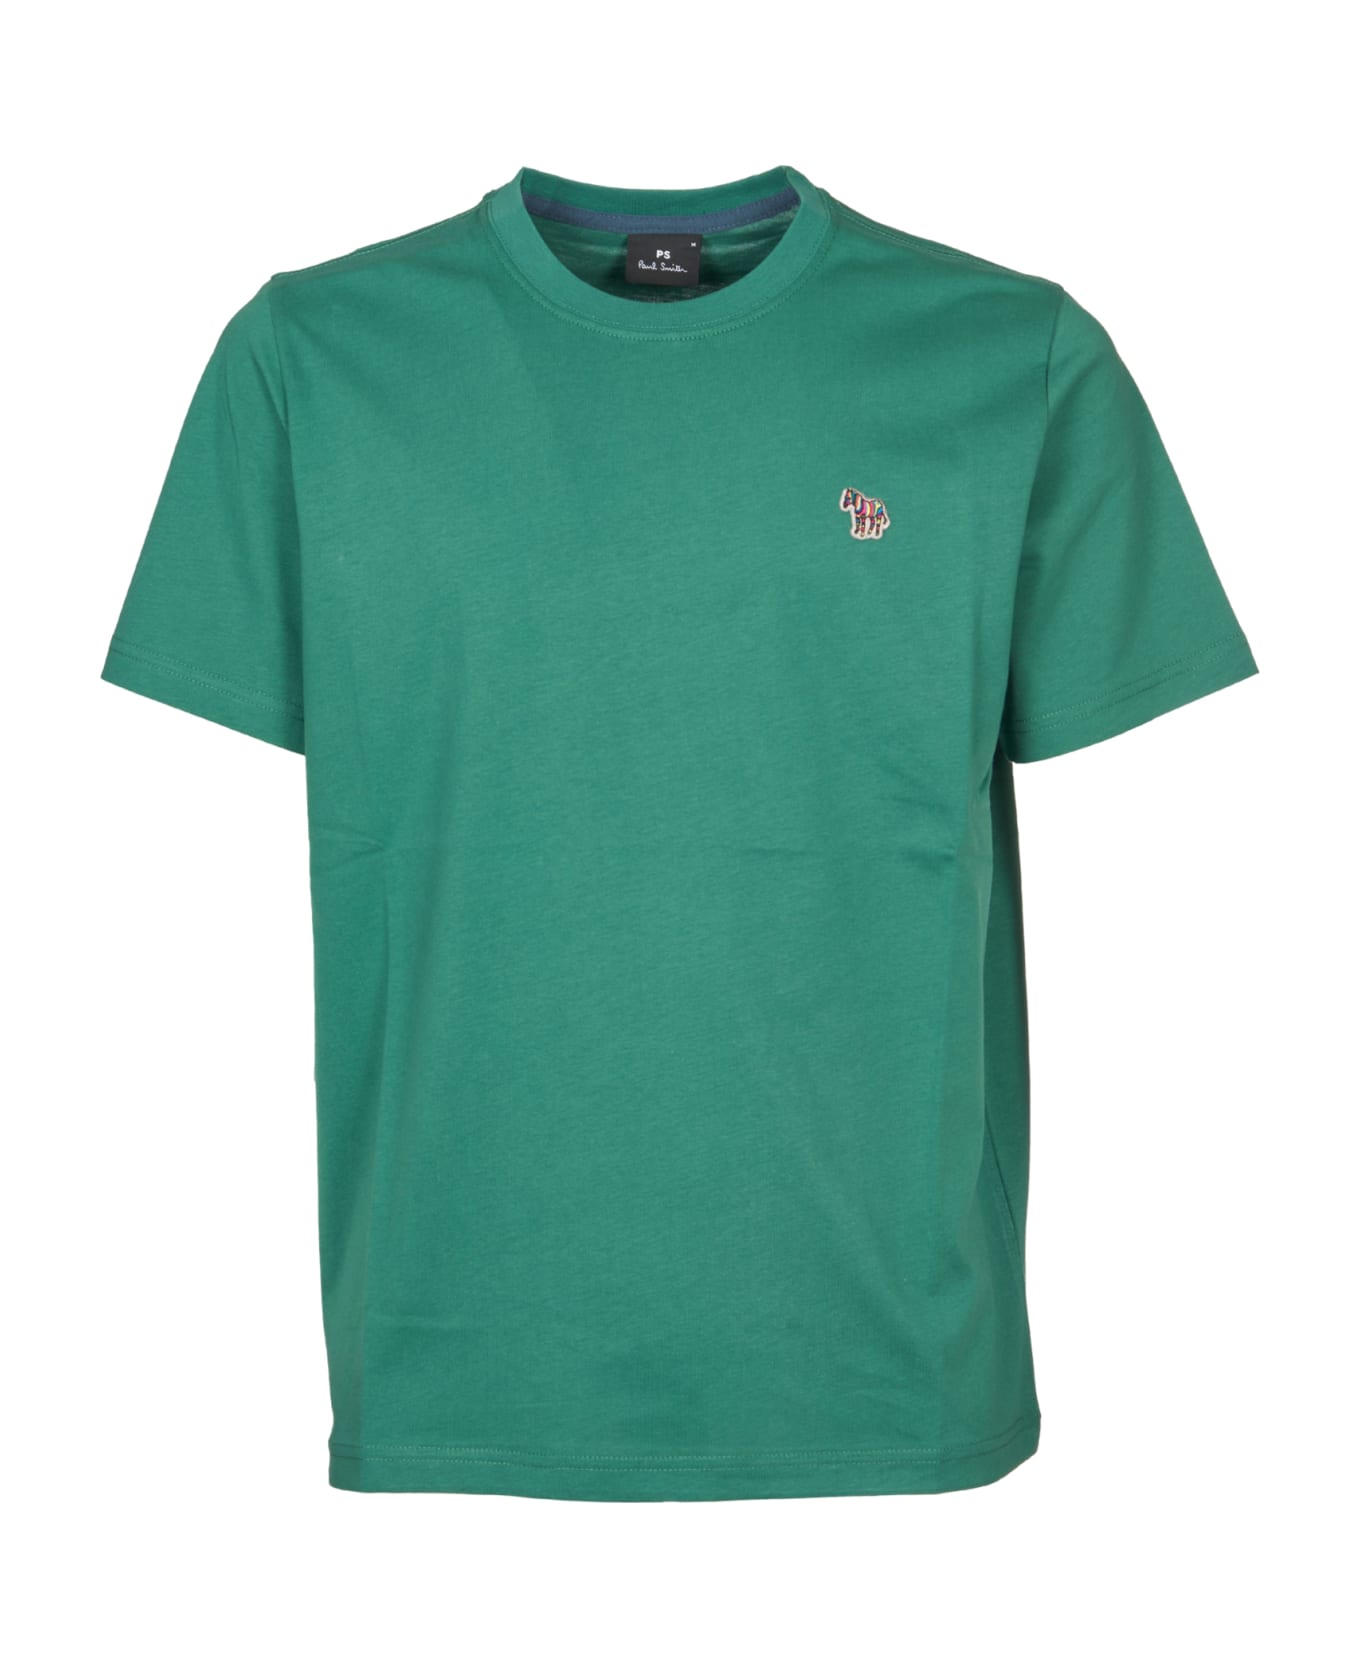 Paul Smith T-shirt - Green